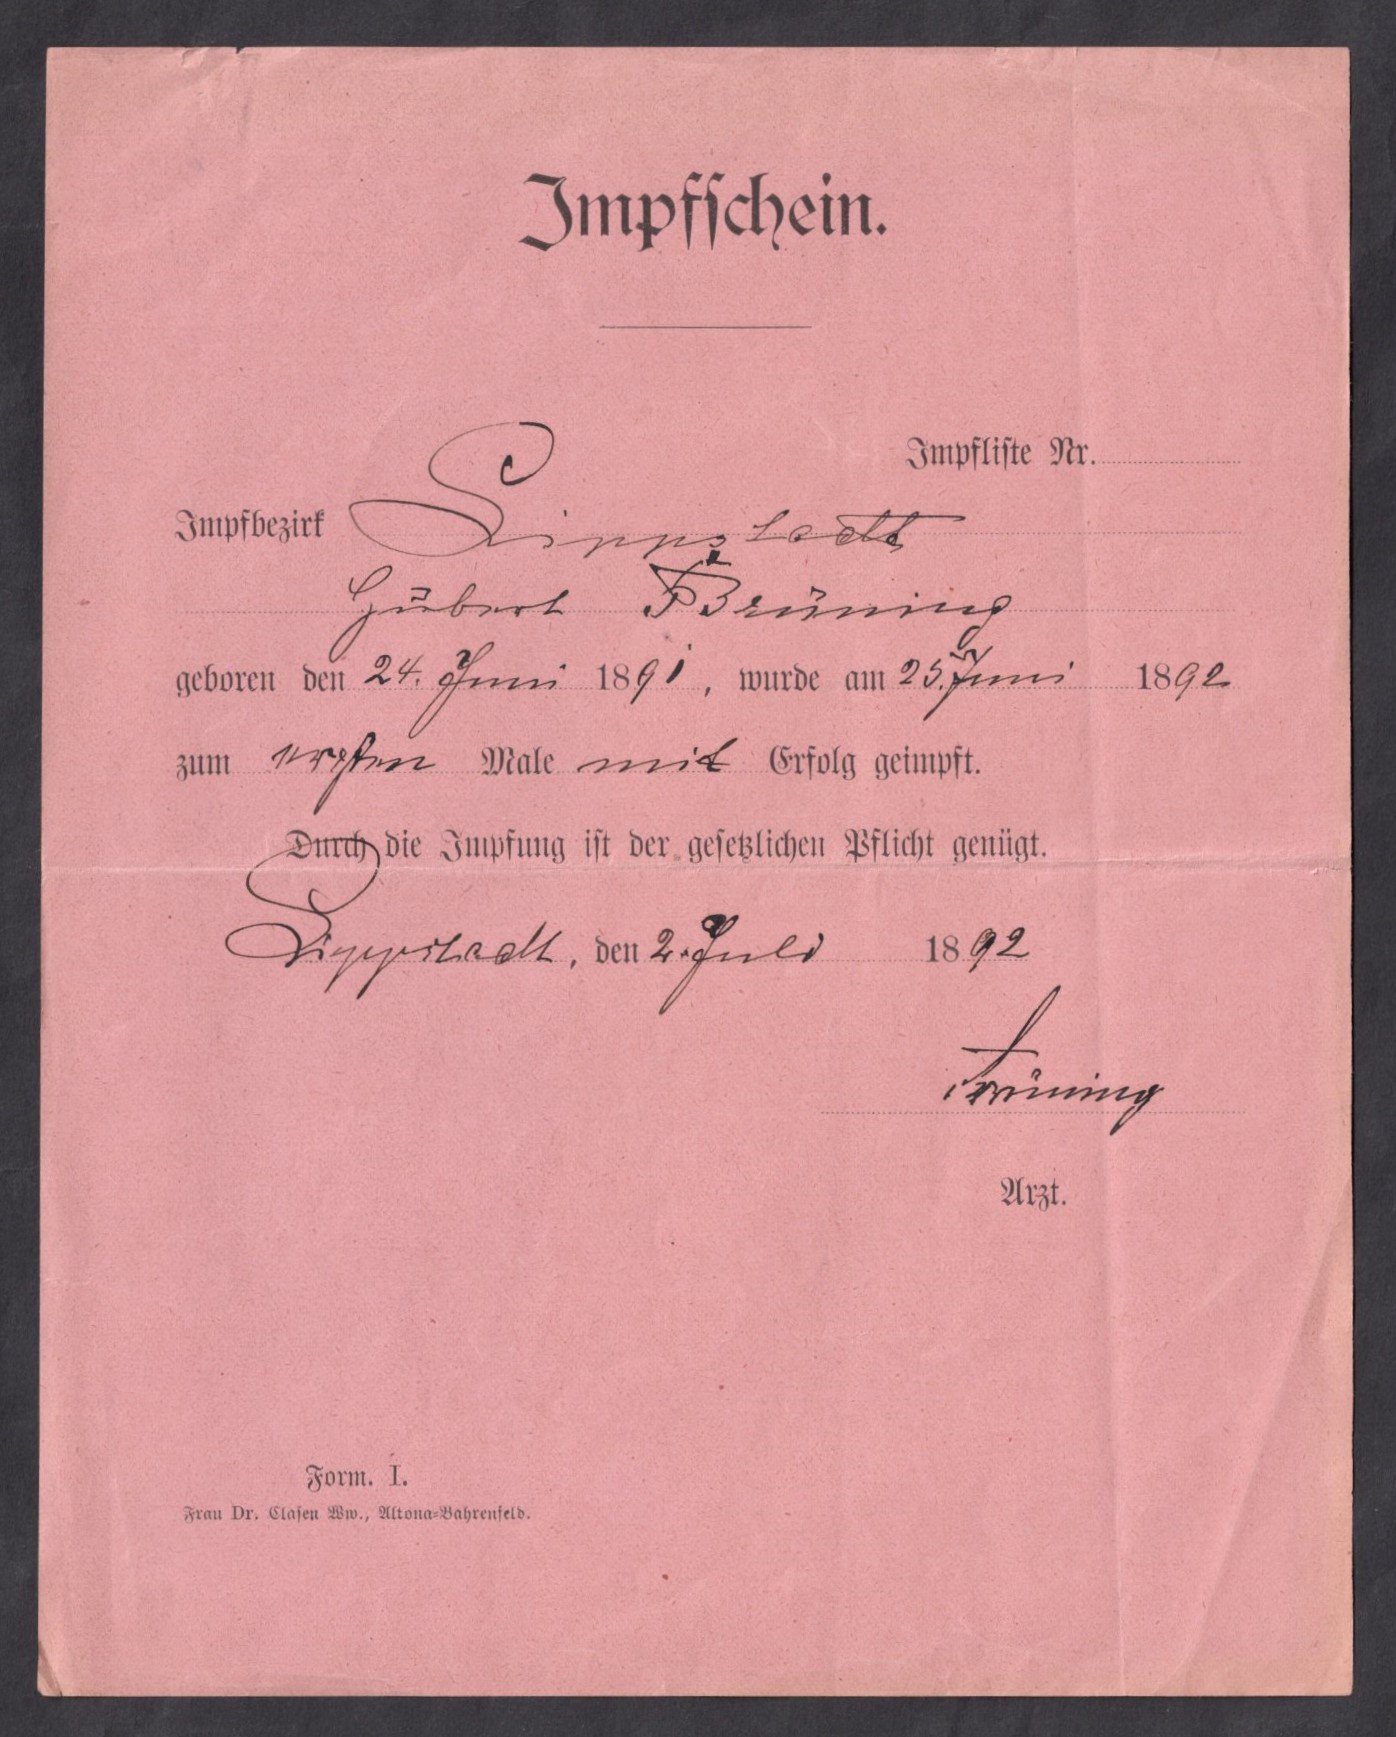 Impfschein Hubert Brüning Lippstadt 1892 (Stadtmuseum Lippstadt RR-F)